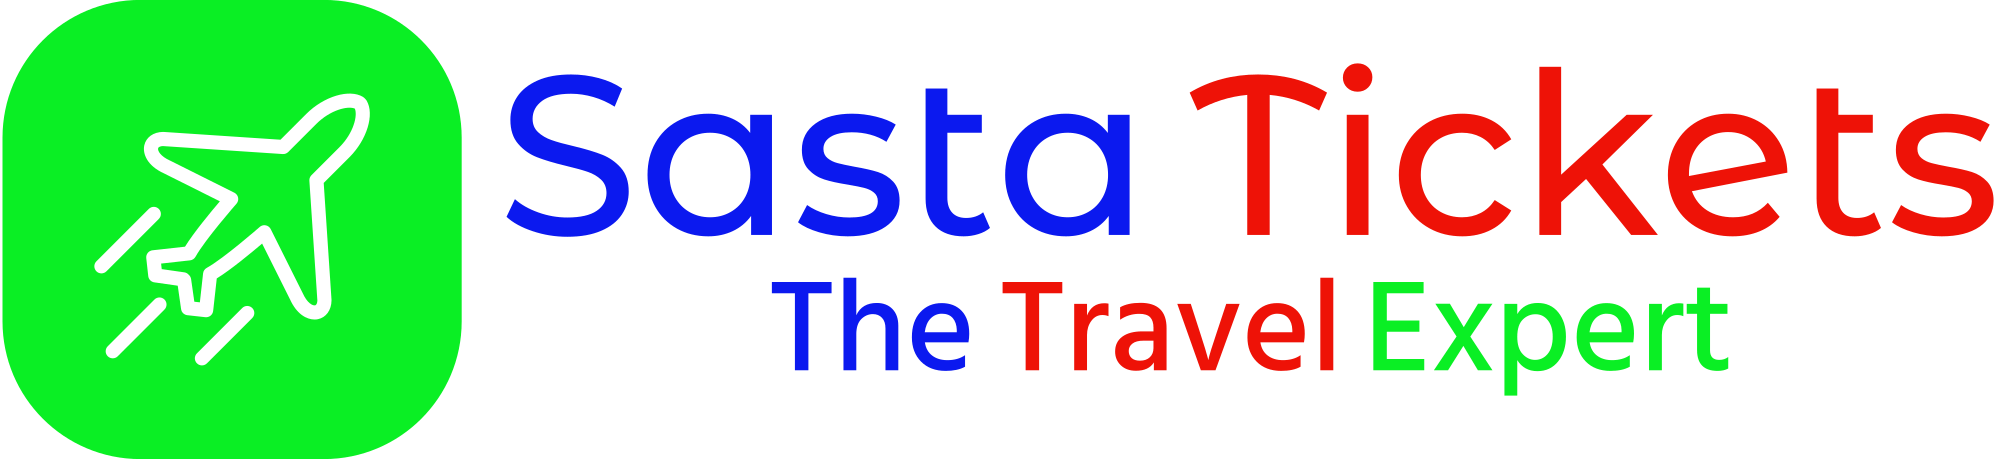 https://www.sastatickets.online/images/sasta-tickets-high-resolution-logo-transparent.png